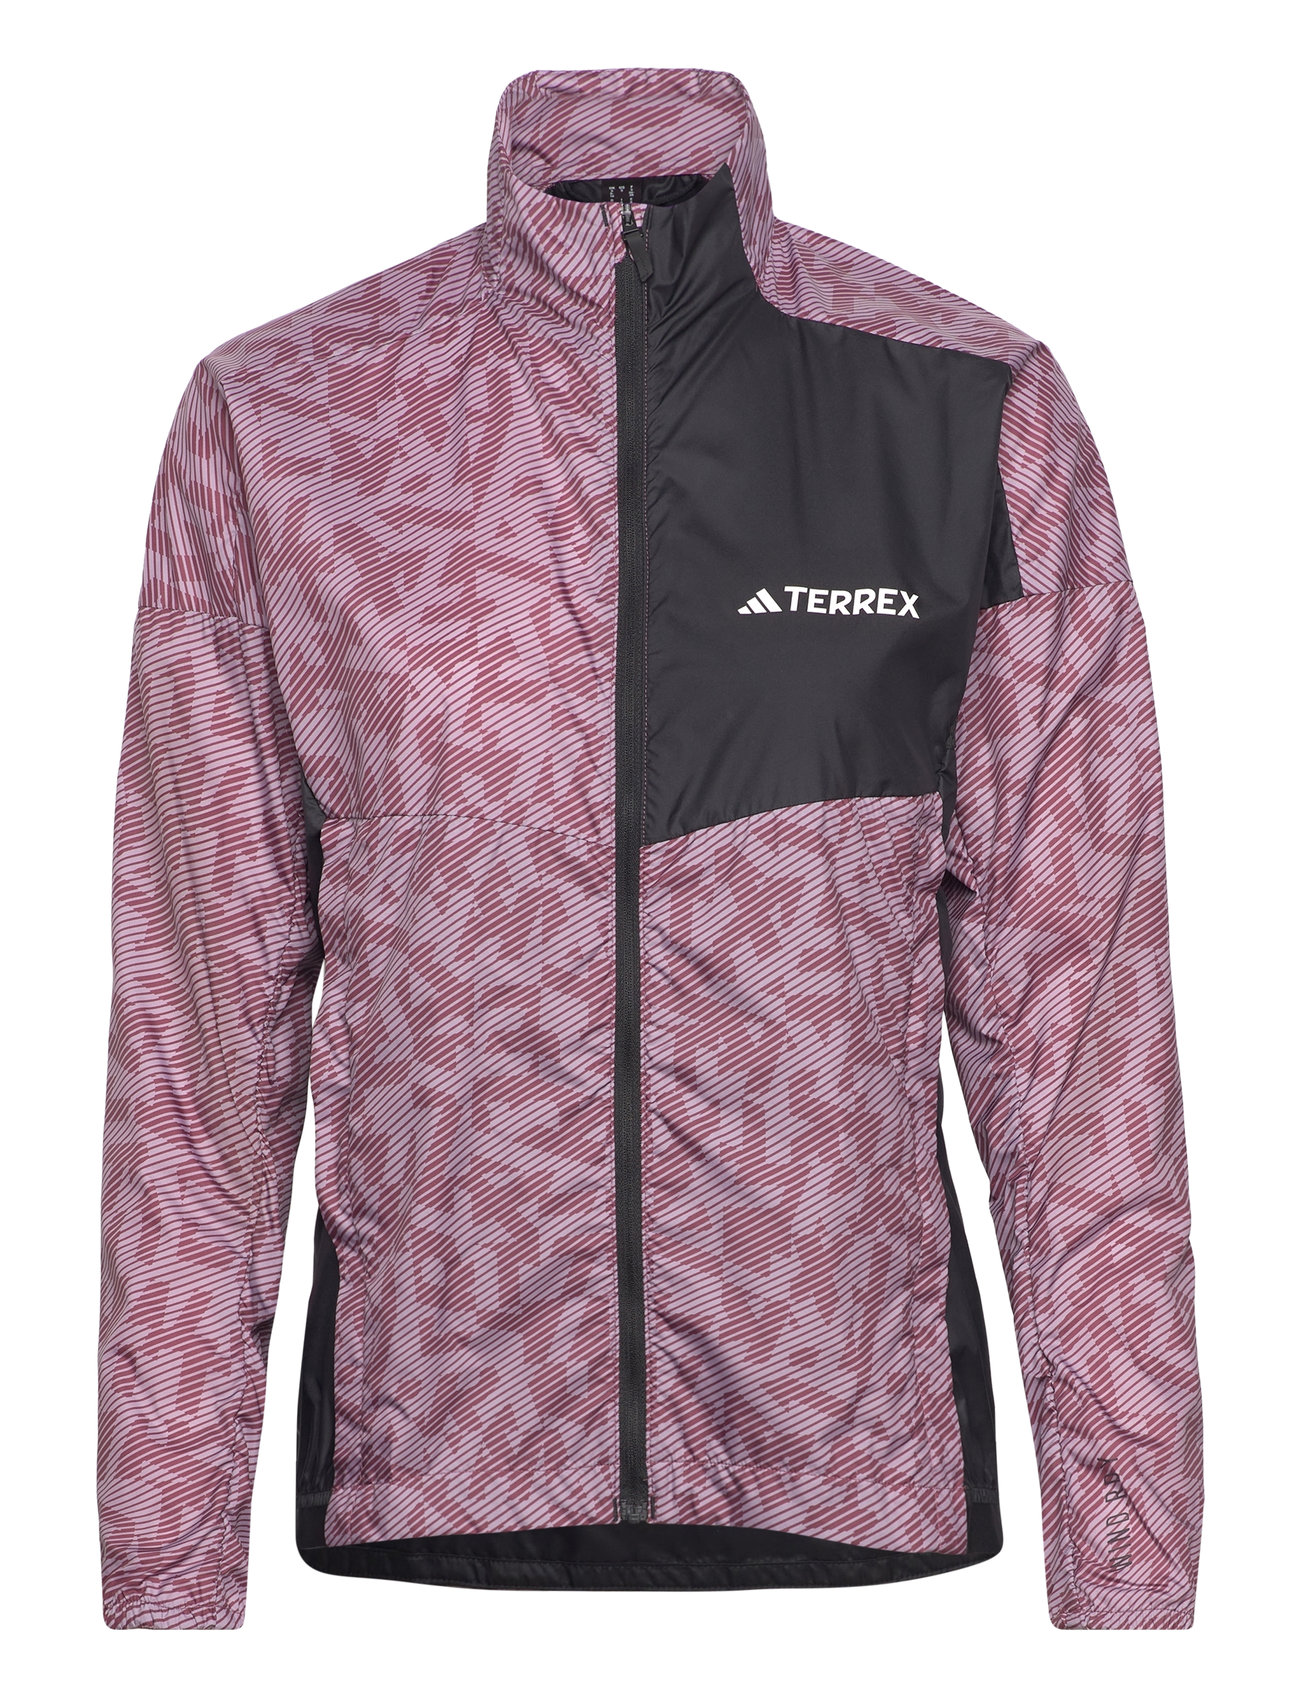 Terrex Trail Running Windbreaker Sport Jackets Windbreakers Pink Adidas Terrex